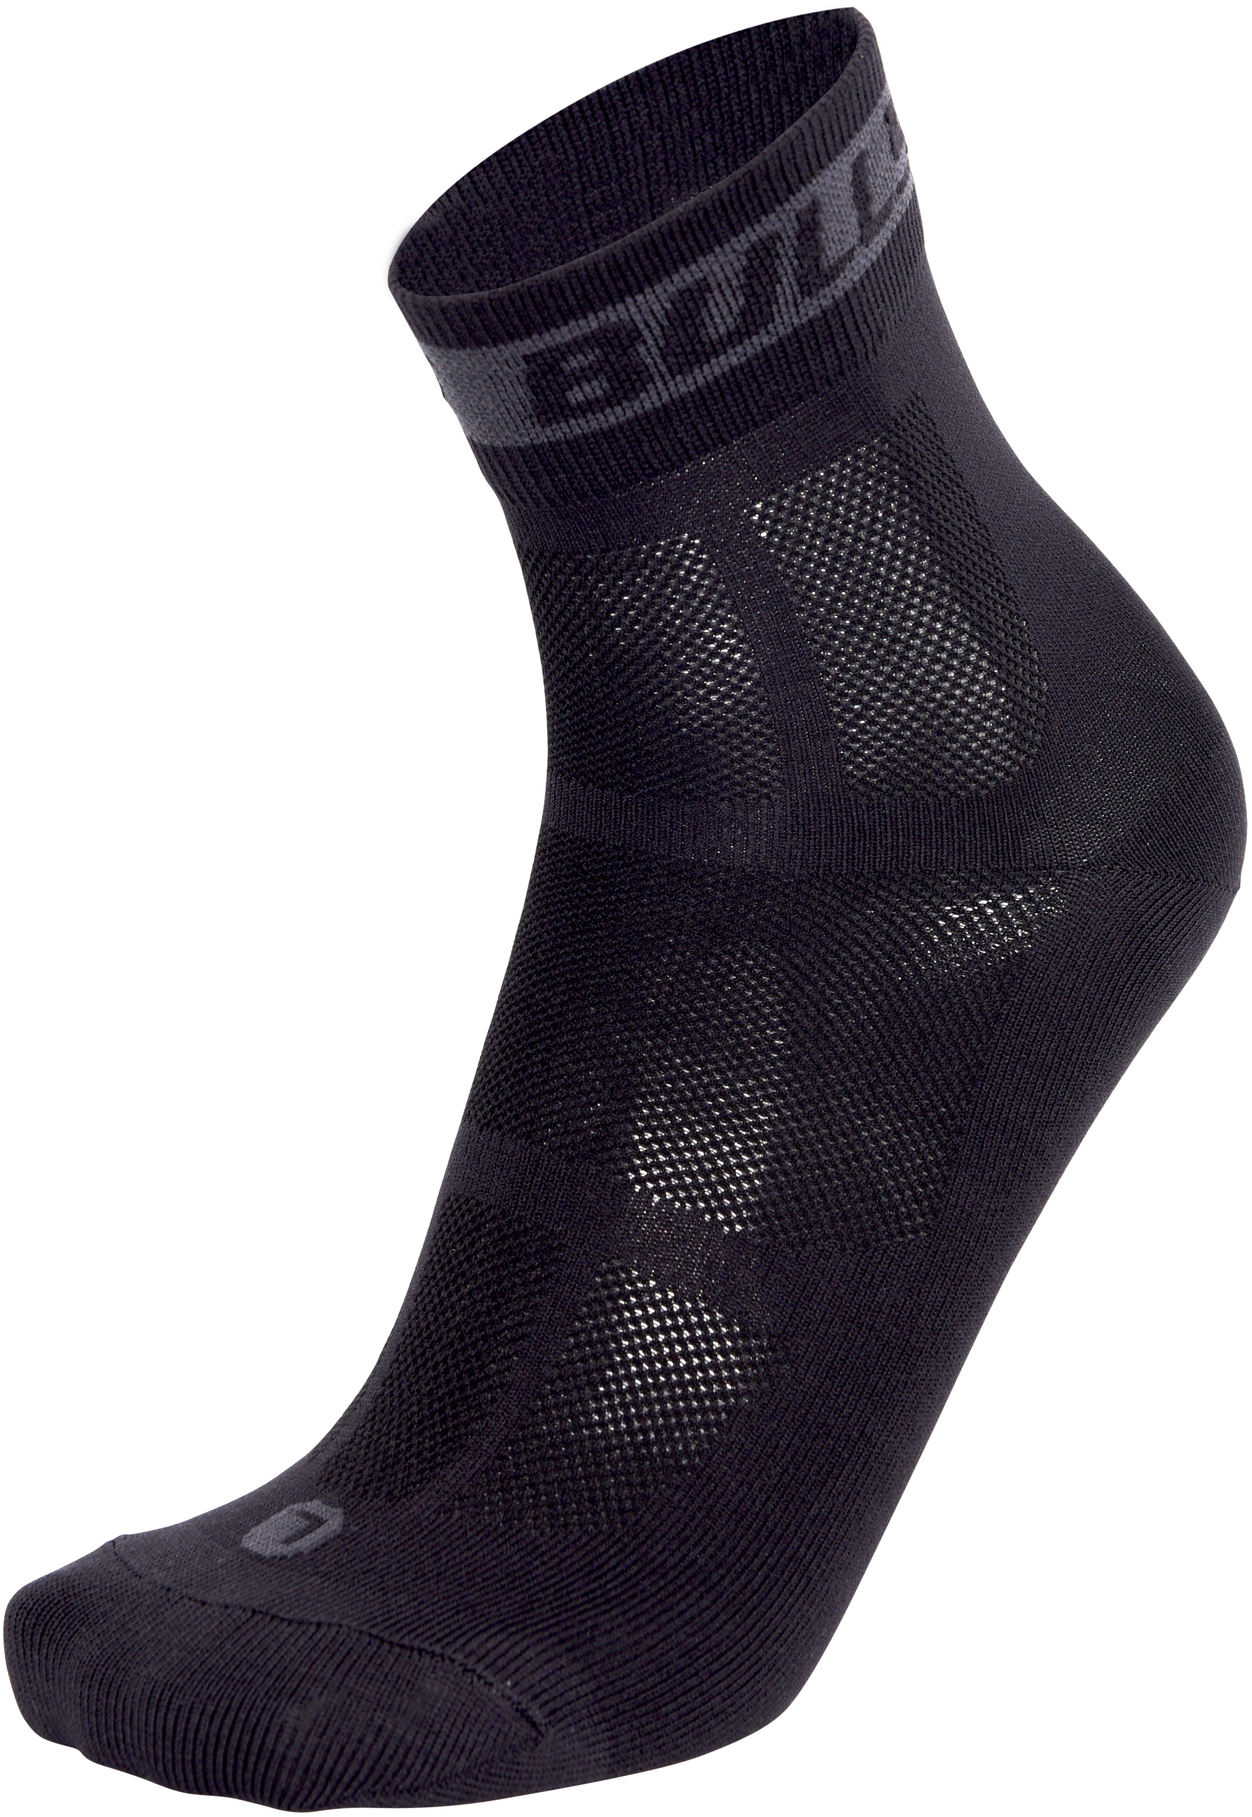 BULLS Socken Long 39-42 black